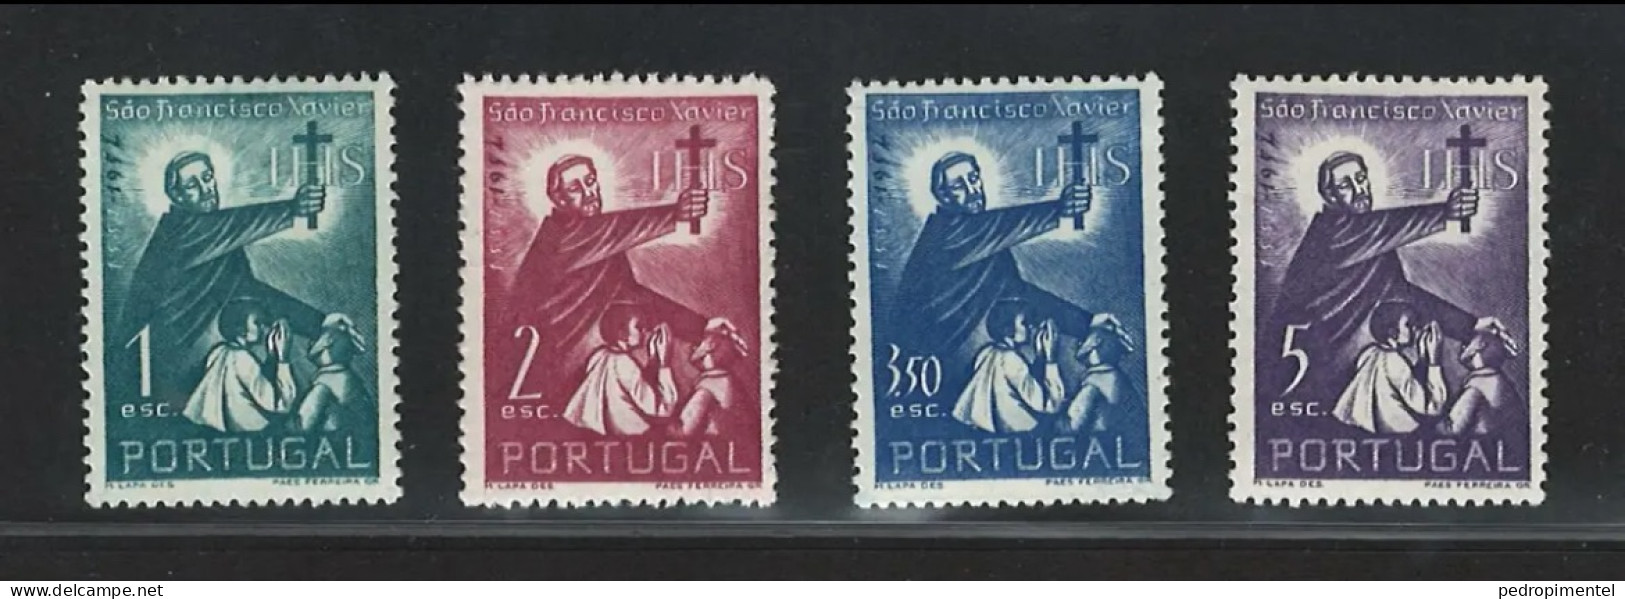 Portugal Stamps 1952 "Saint Francis" Condition MH OG #691-694 - Ongebruikt